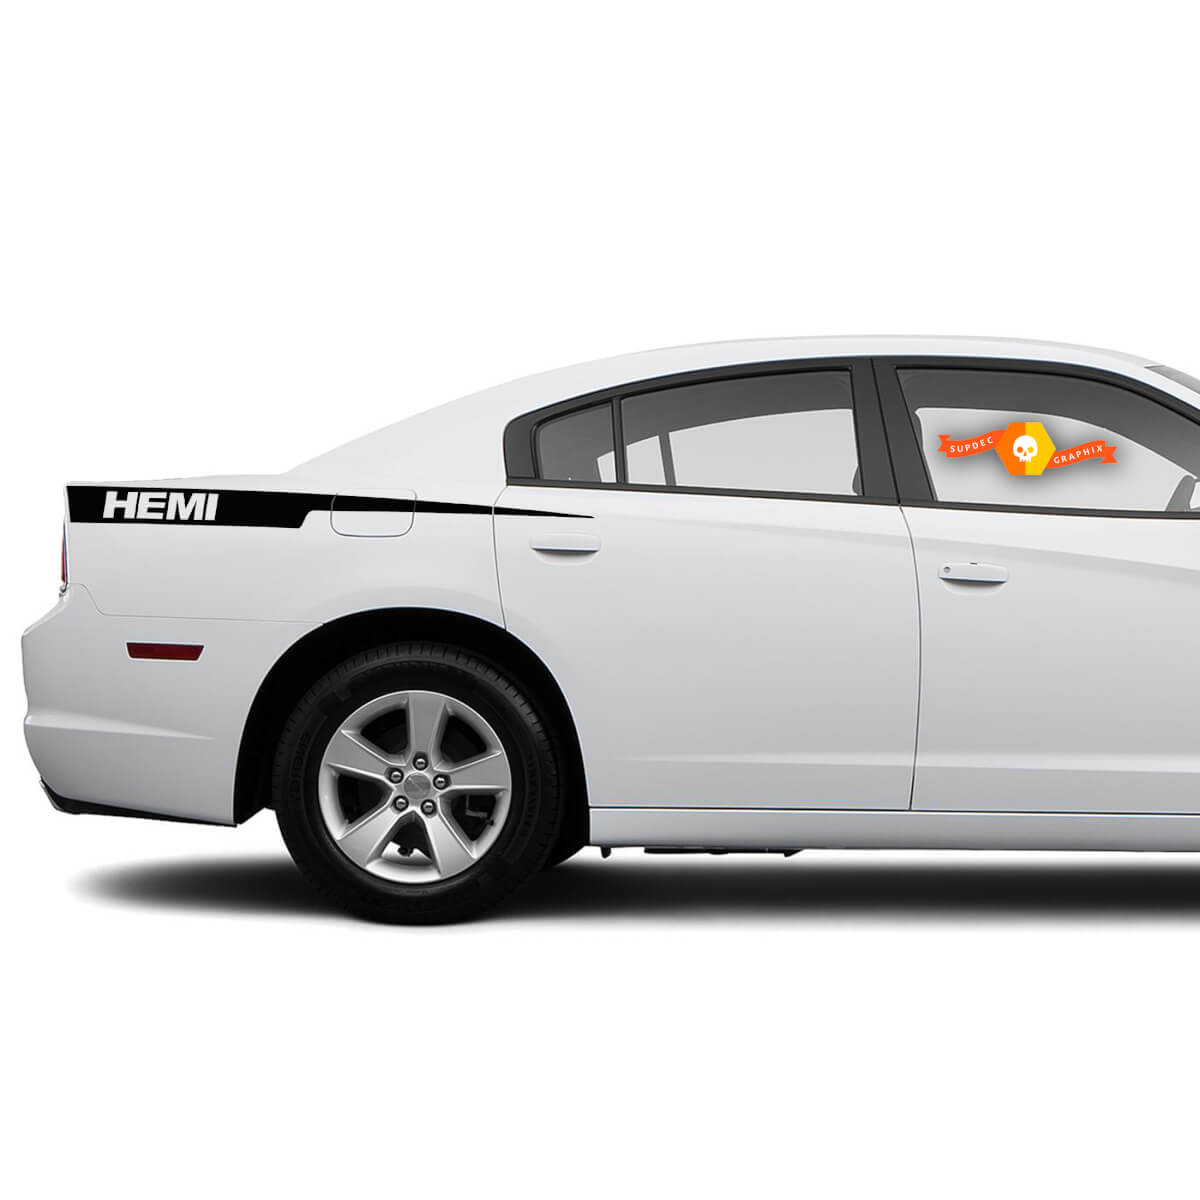 Dodge Charger Hemi Razor Decal Sticker Side Graphics se adapta a modelos 2011-2014